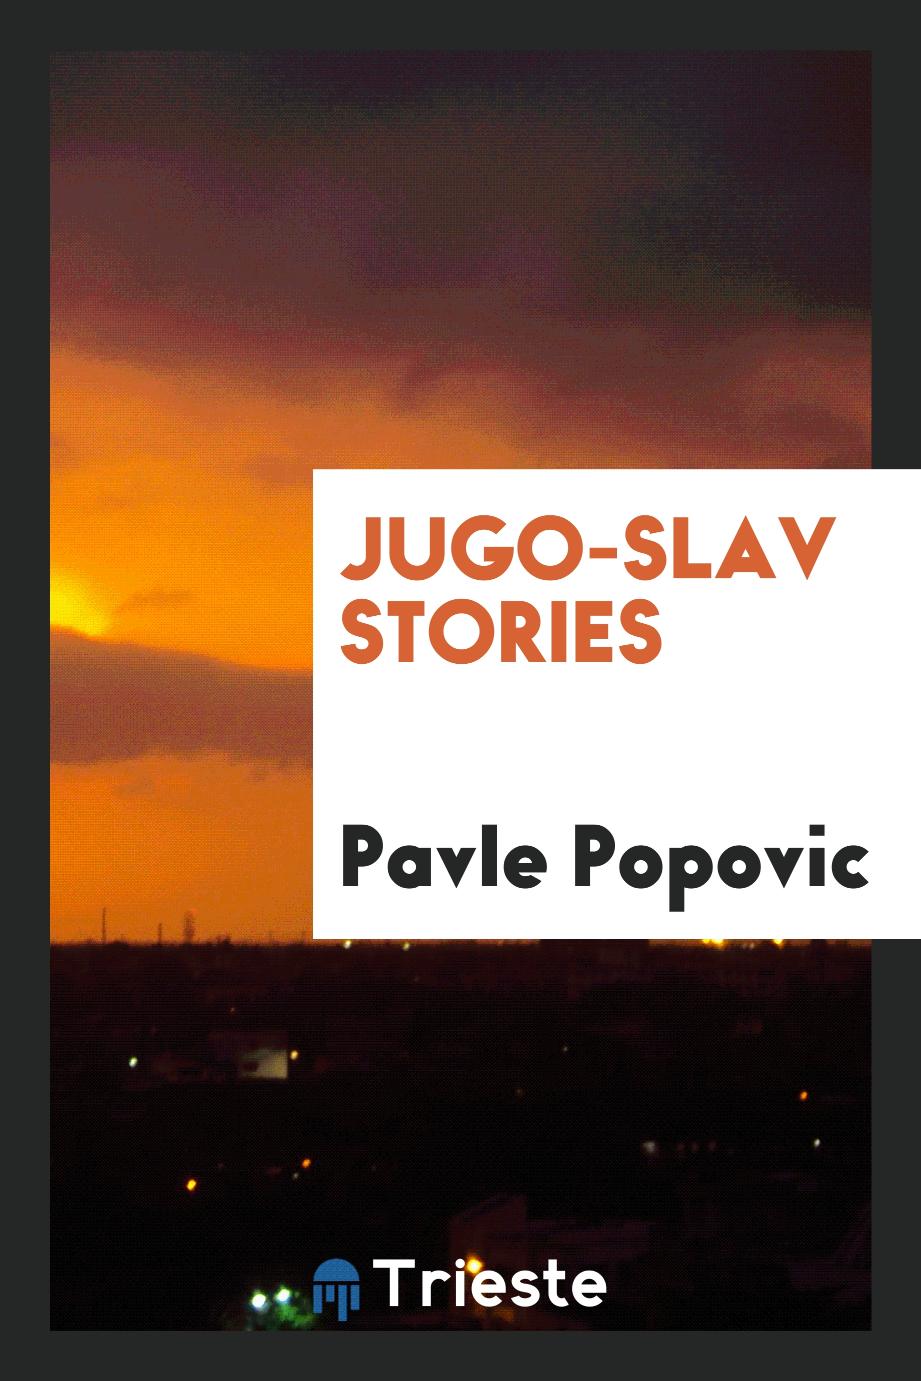 Jugo-Slav stories